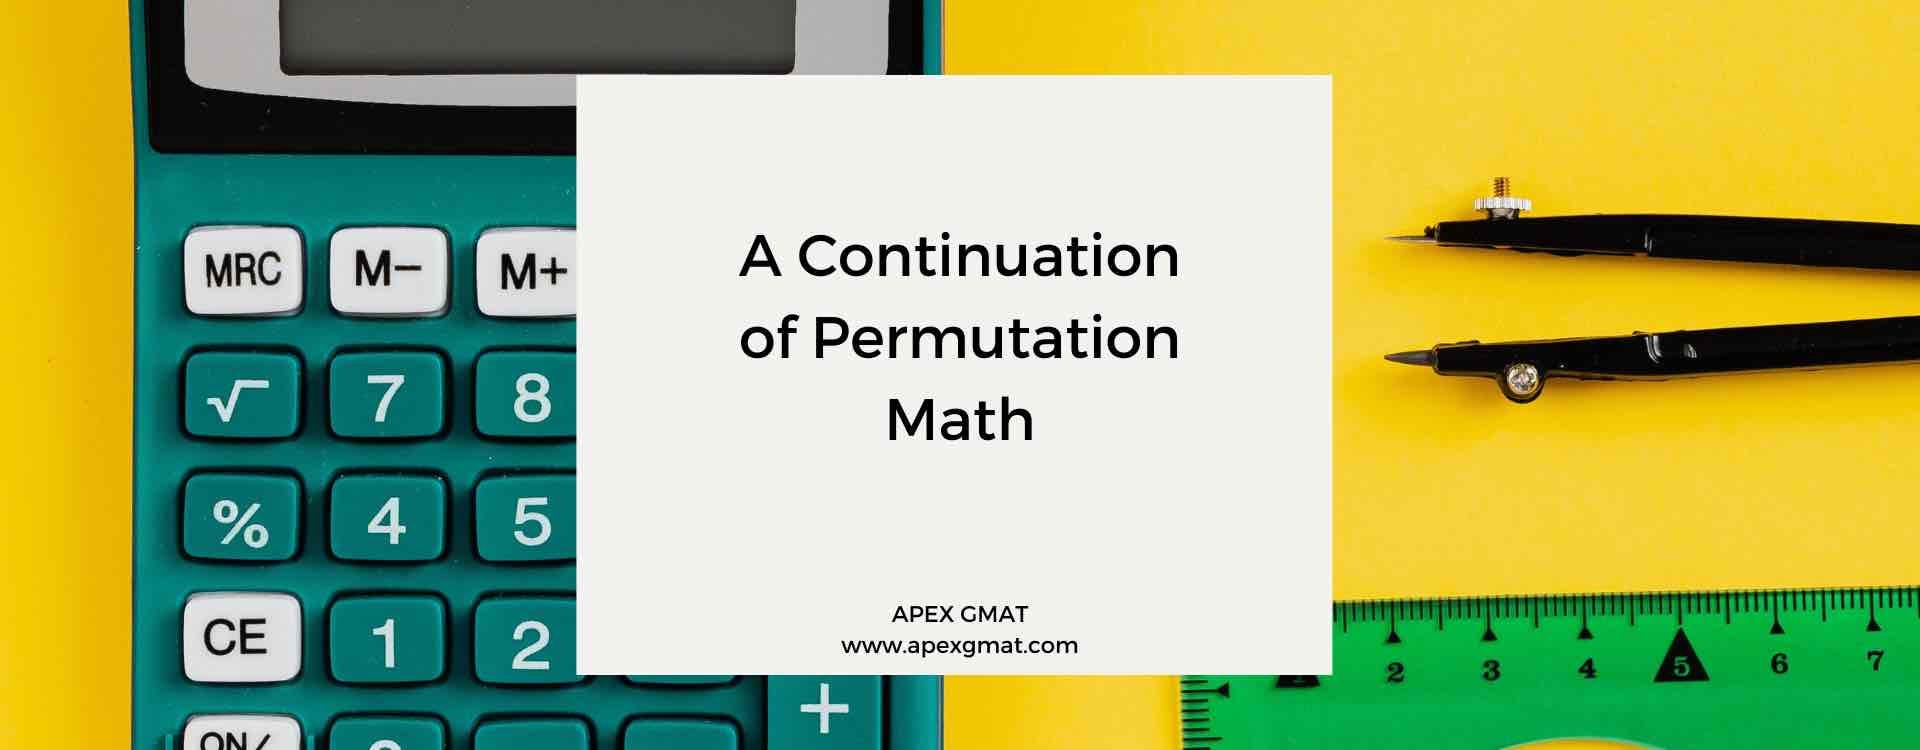 A Continuation of Permutation Math